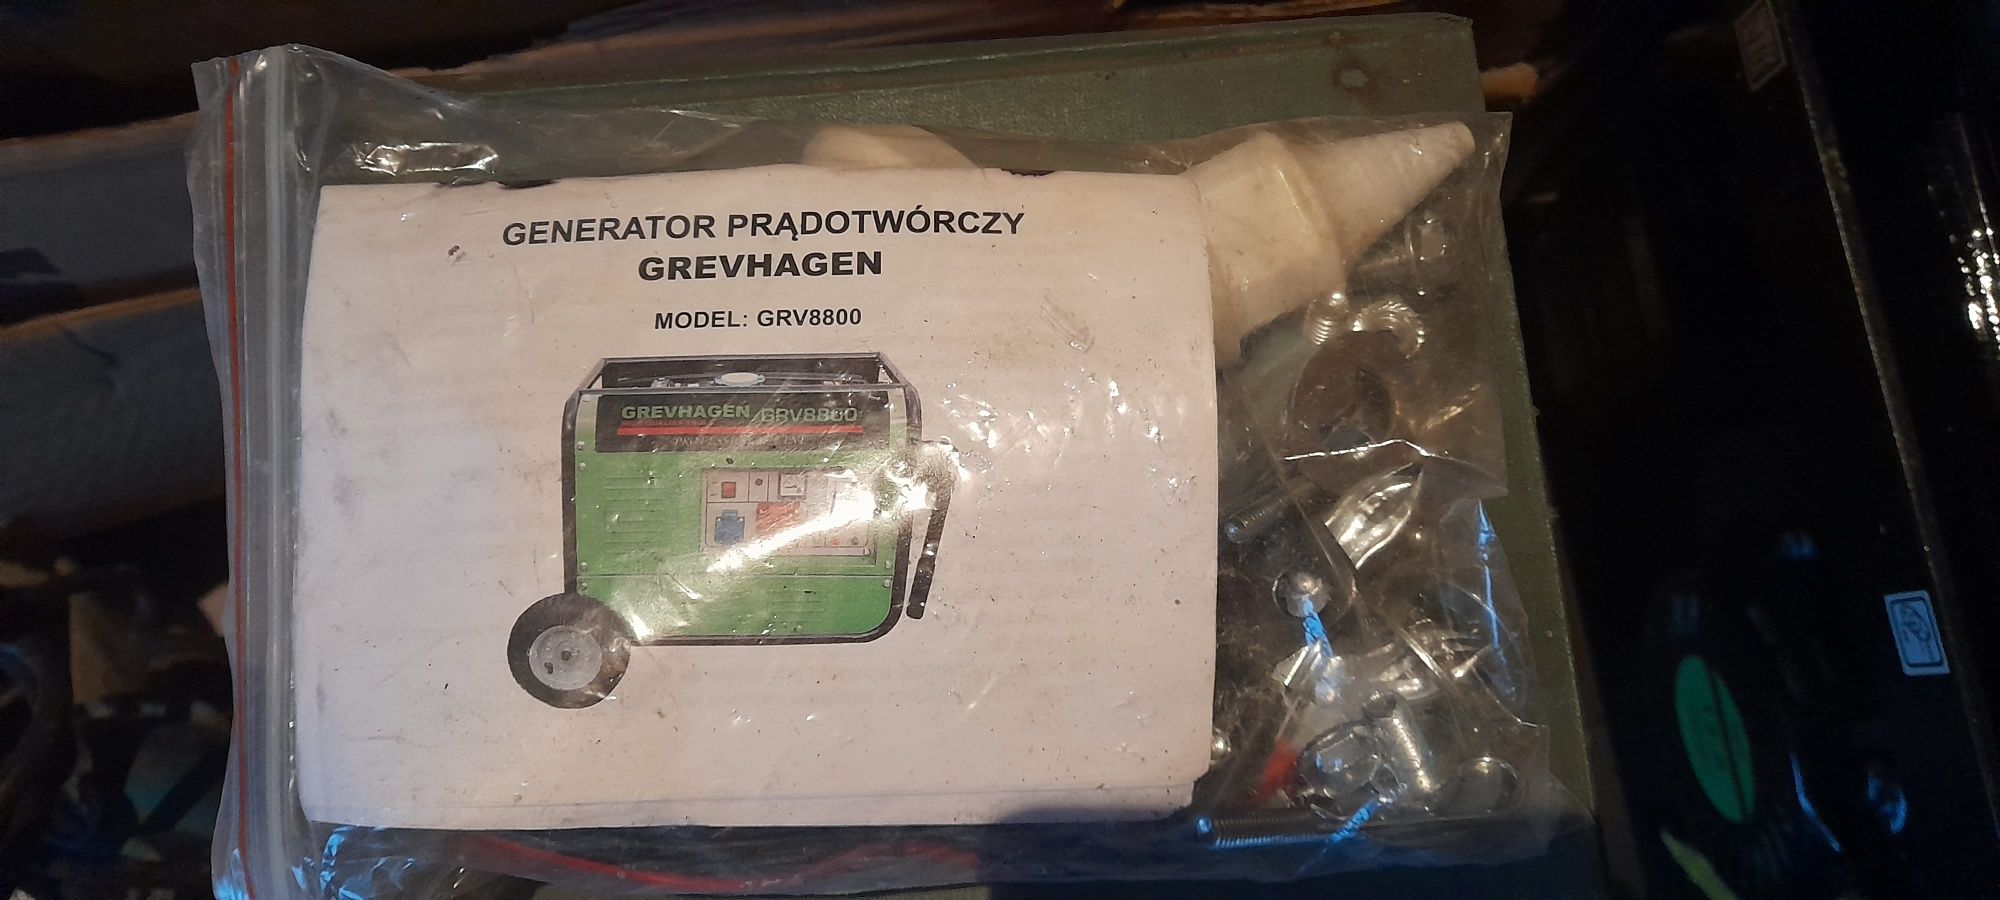 Generator prądotwórczy Grevhagen model GRV 8800